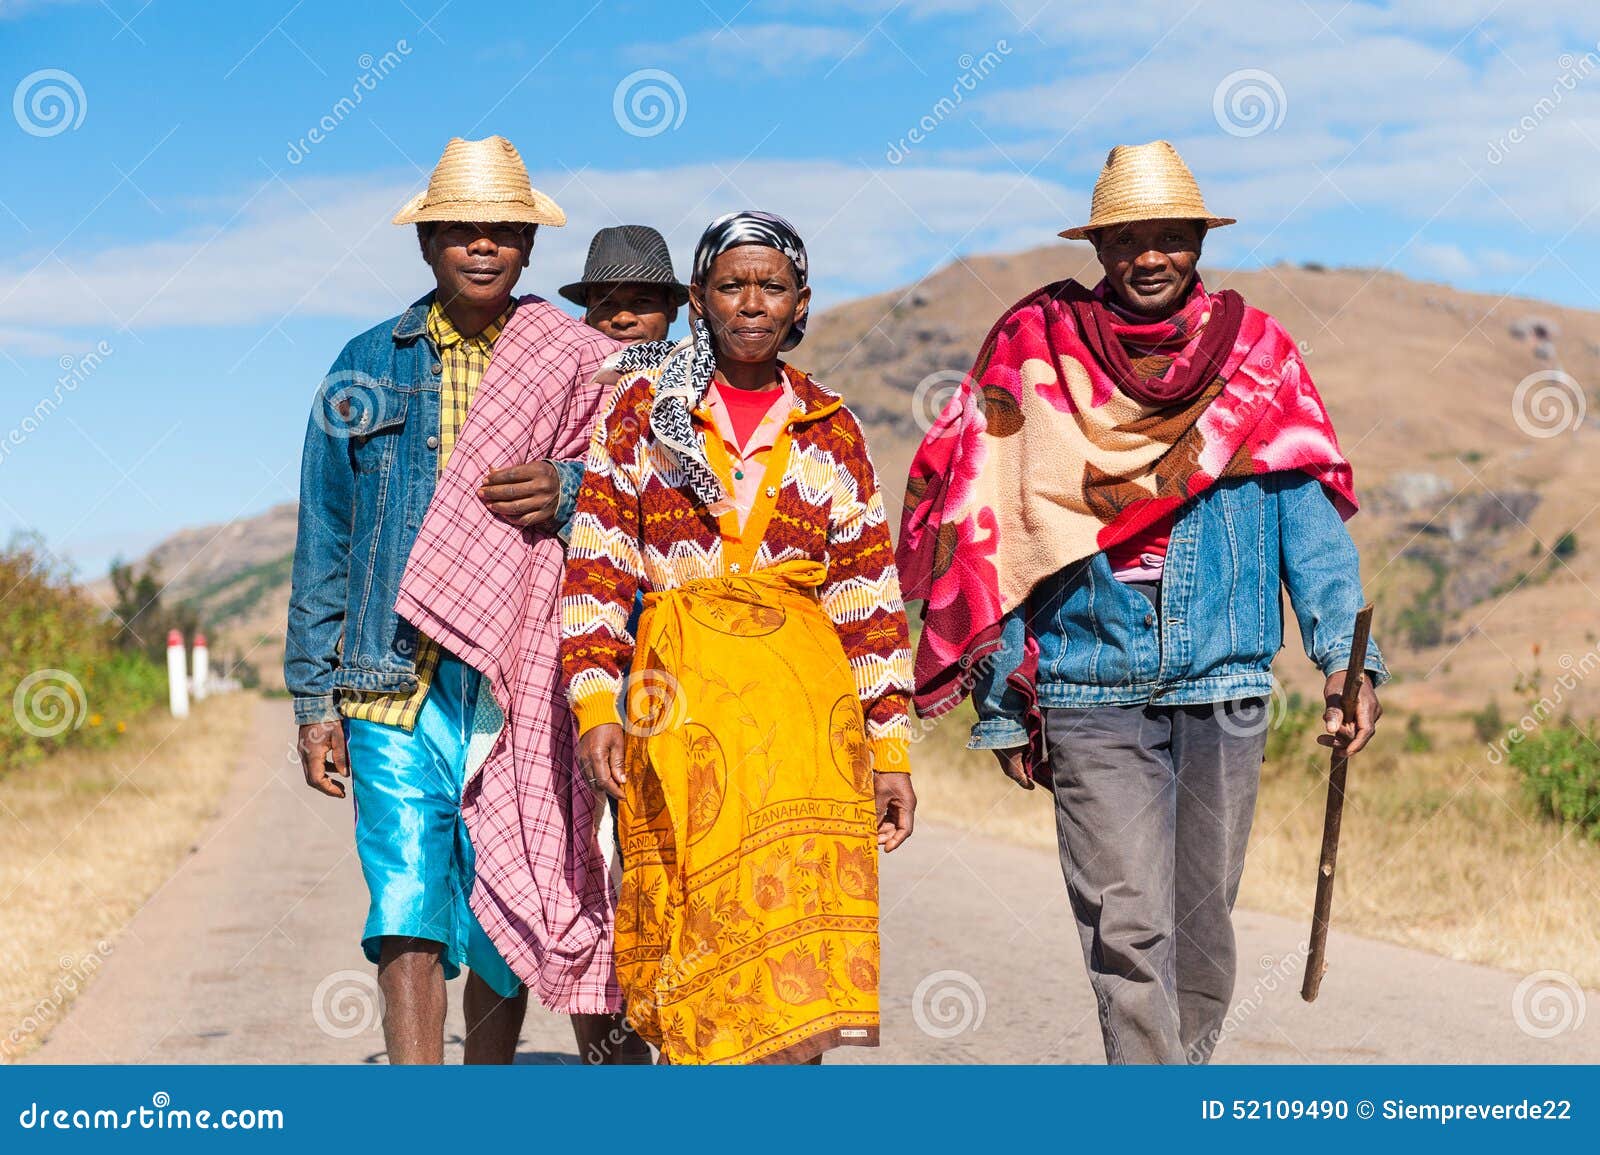 People in ANTANANARIVO, MADAGASCAR Editorial Image - Image of island